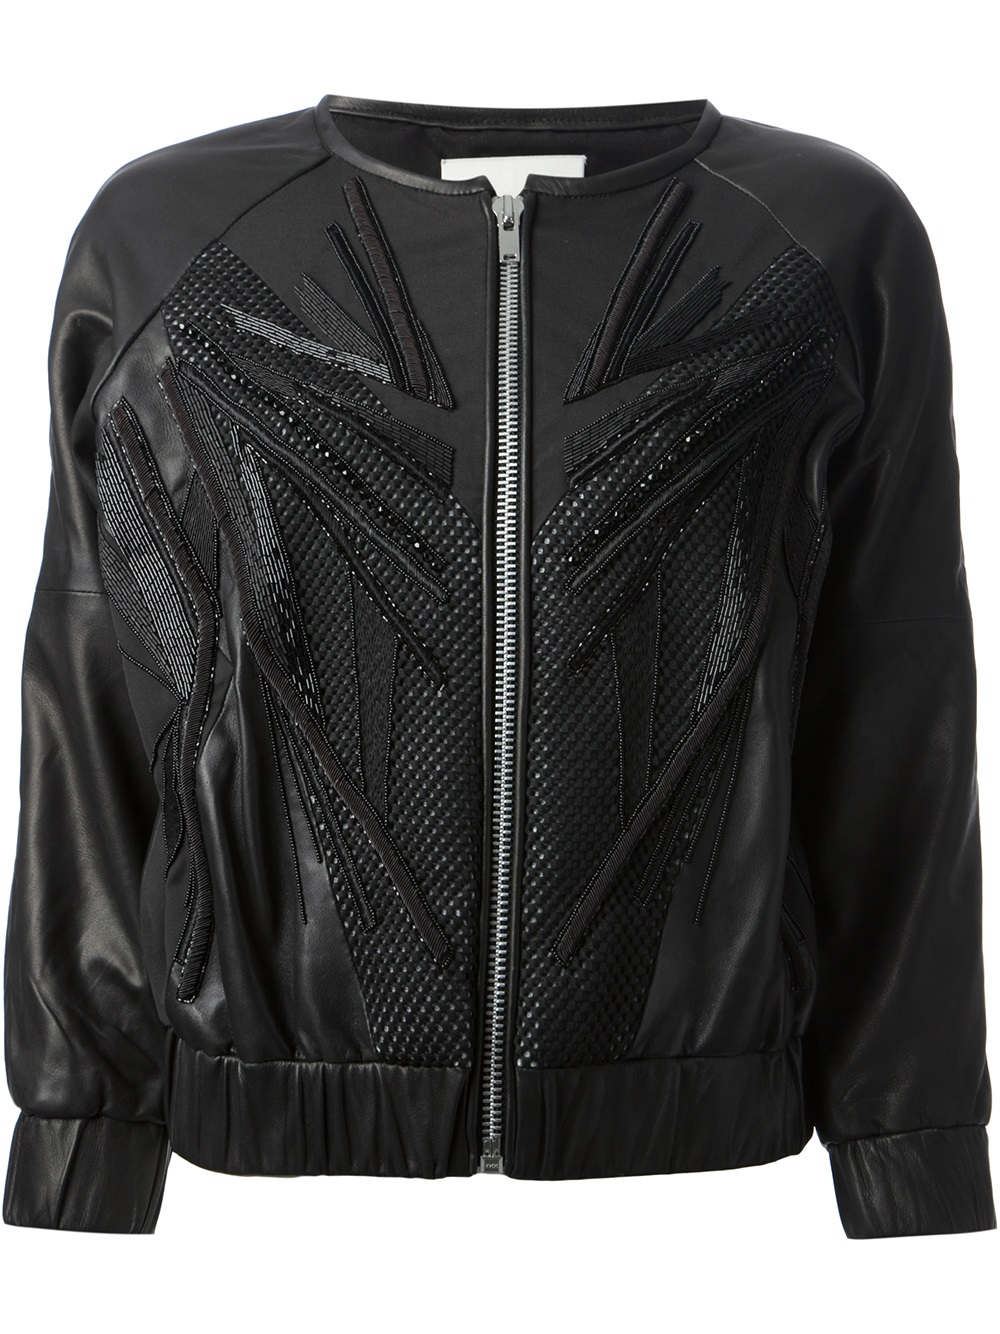 Lyst - Iro Cassie Embellished Bomber Jacket in Black